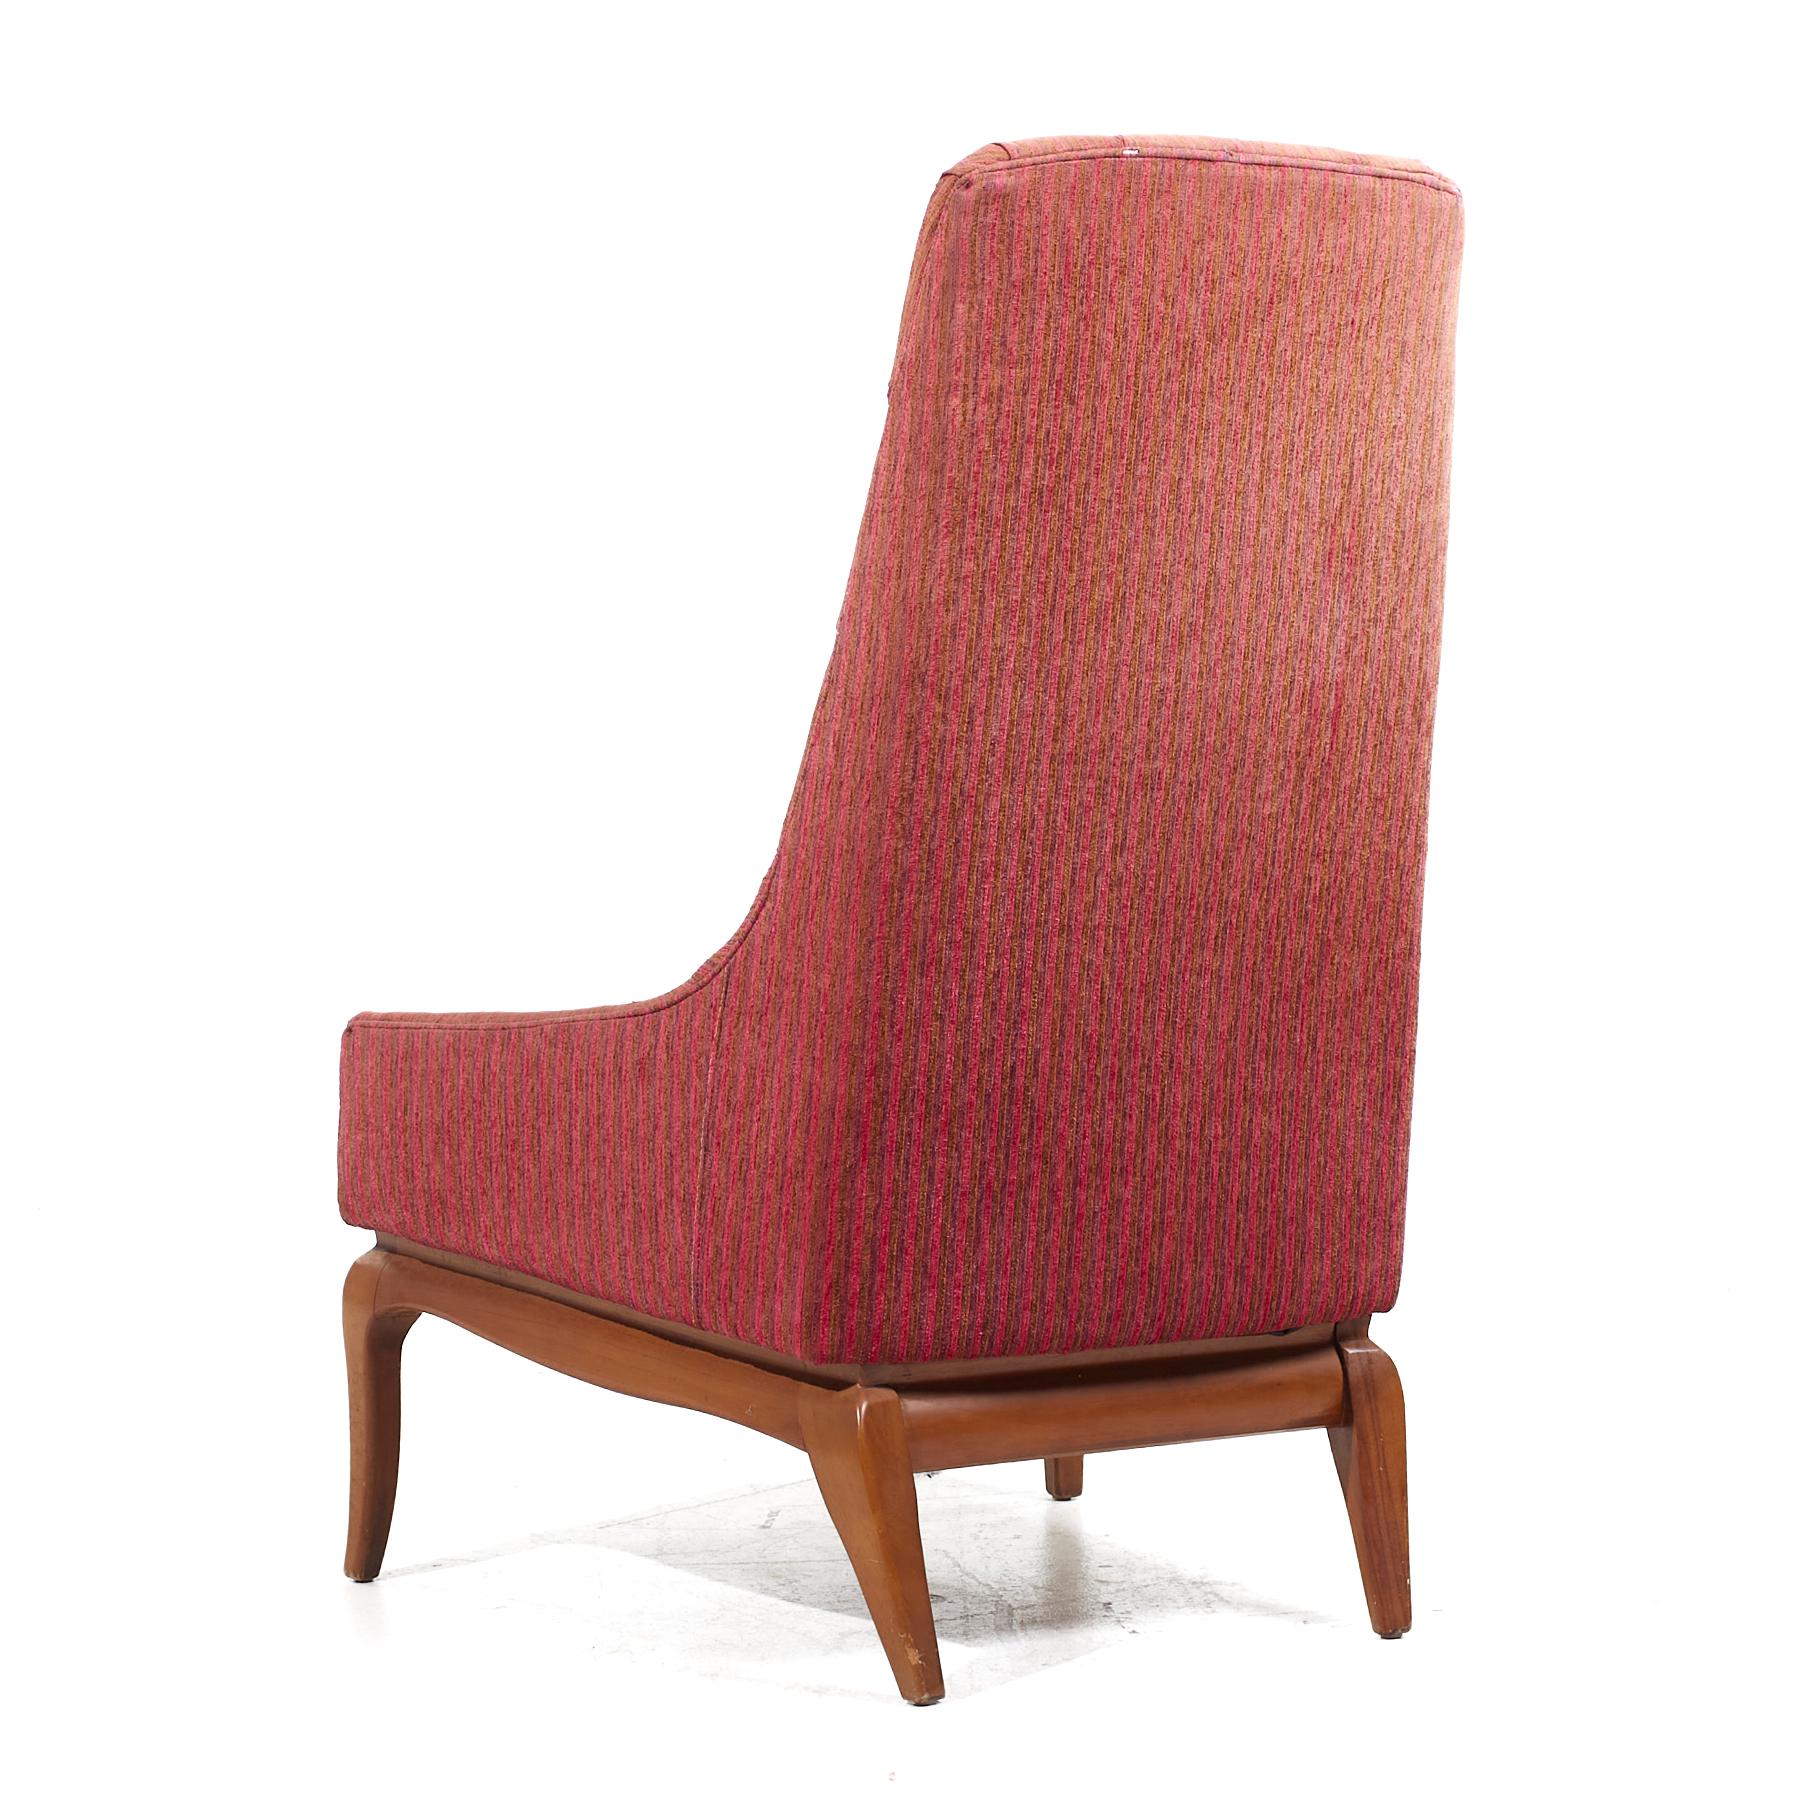 T H Robsjohn Gibbings for Widdicomb Mid Century Highback Lounge Chairs - Pair 1 For Sale 2